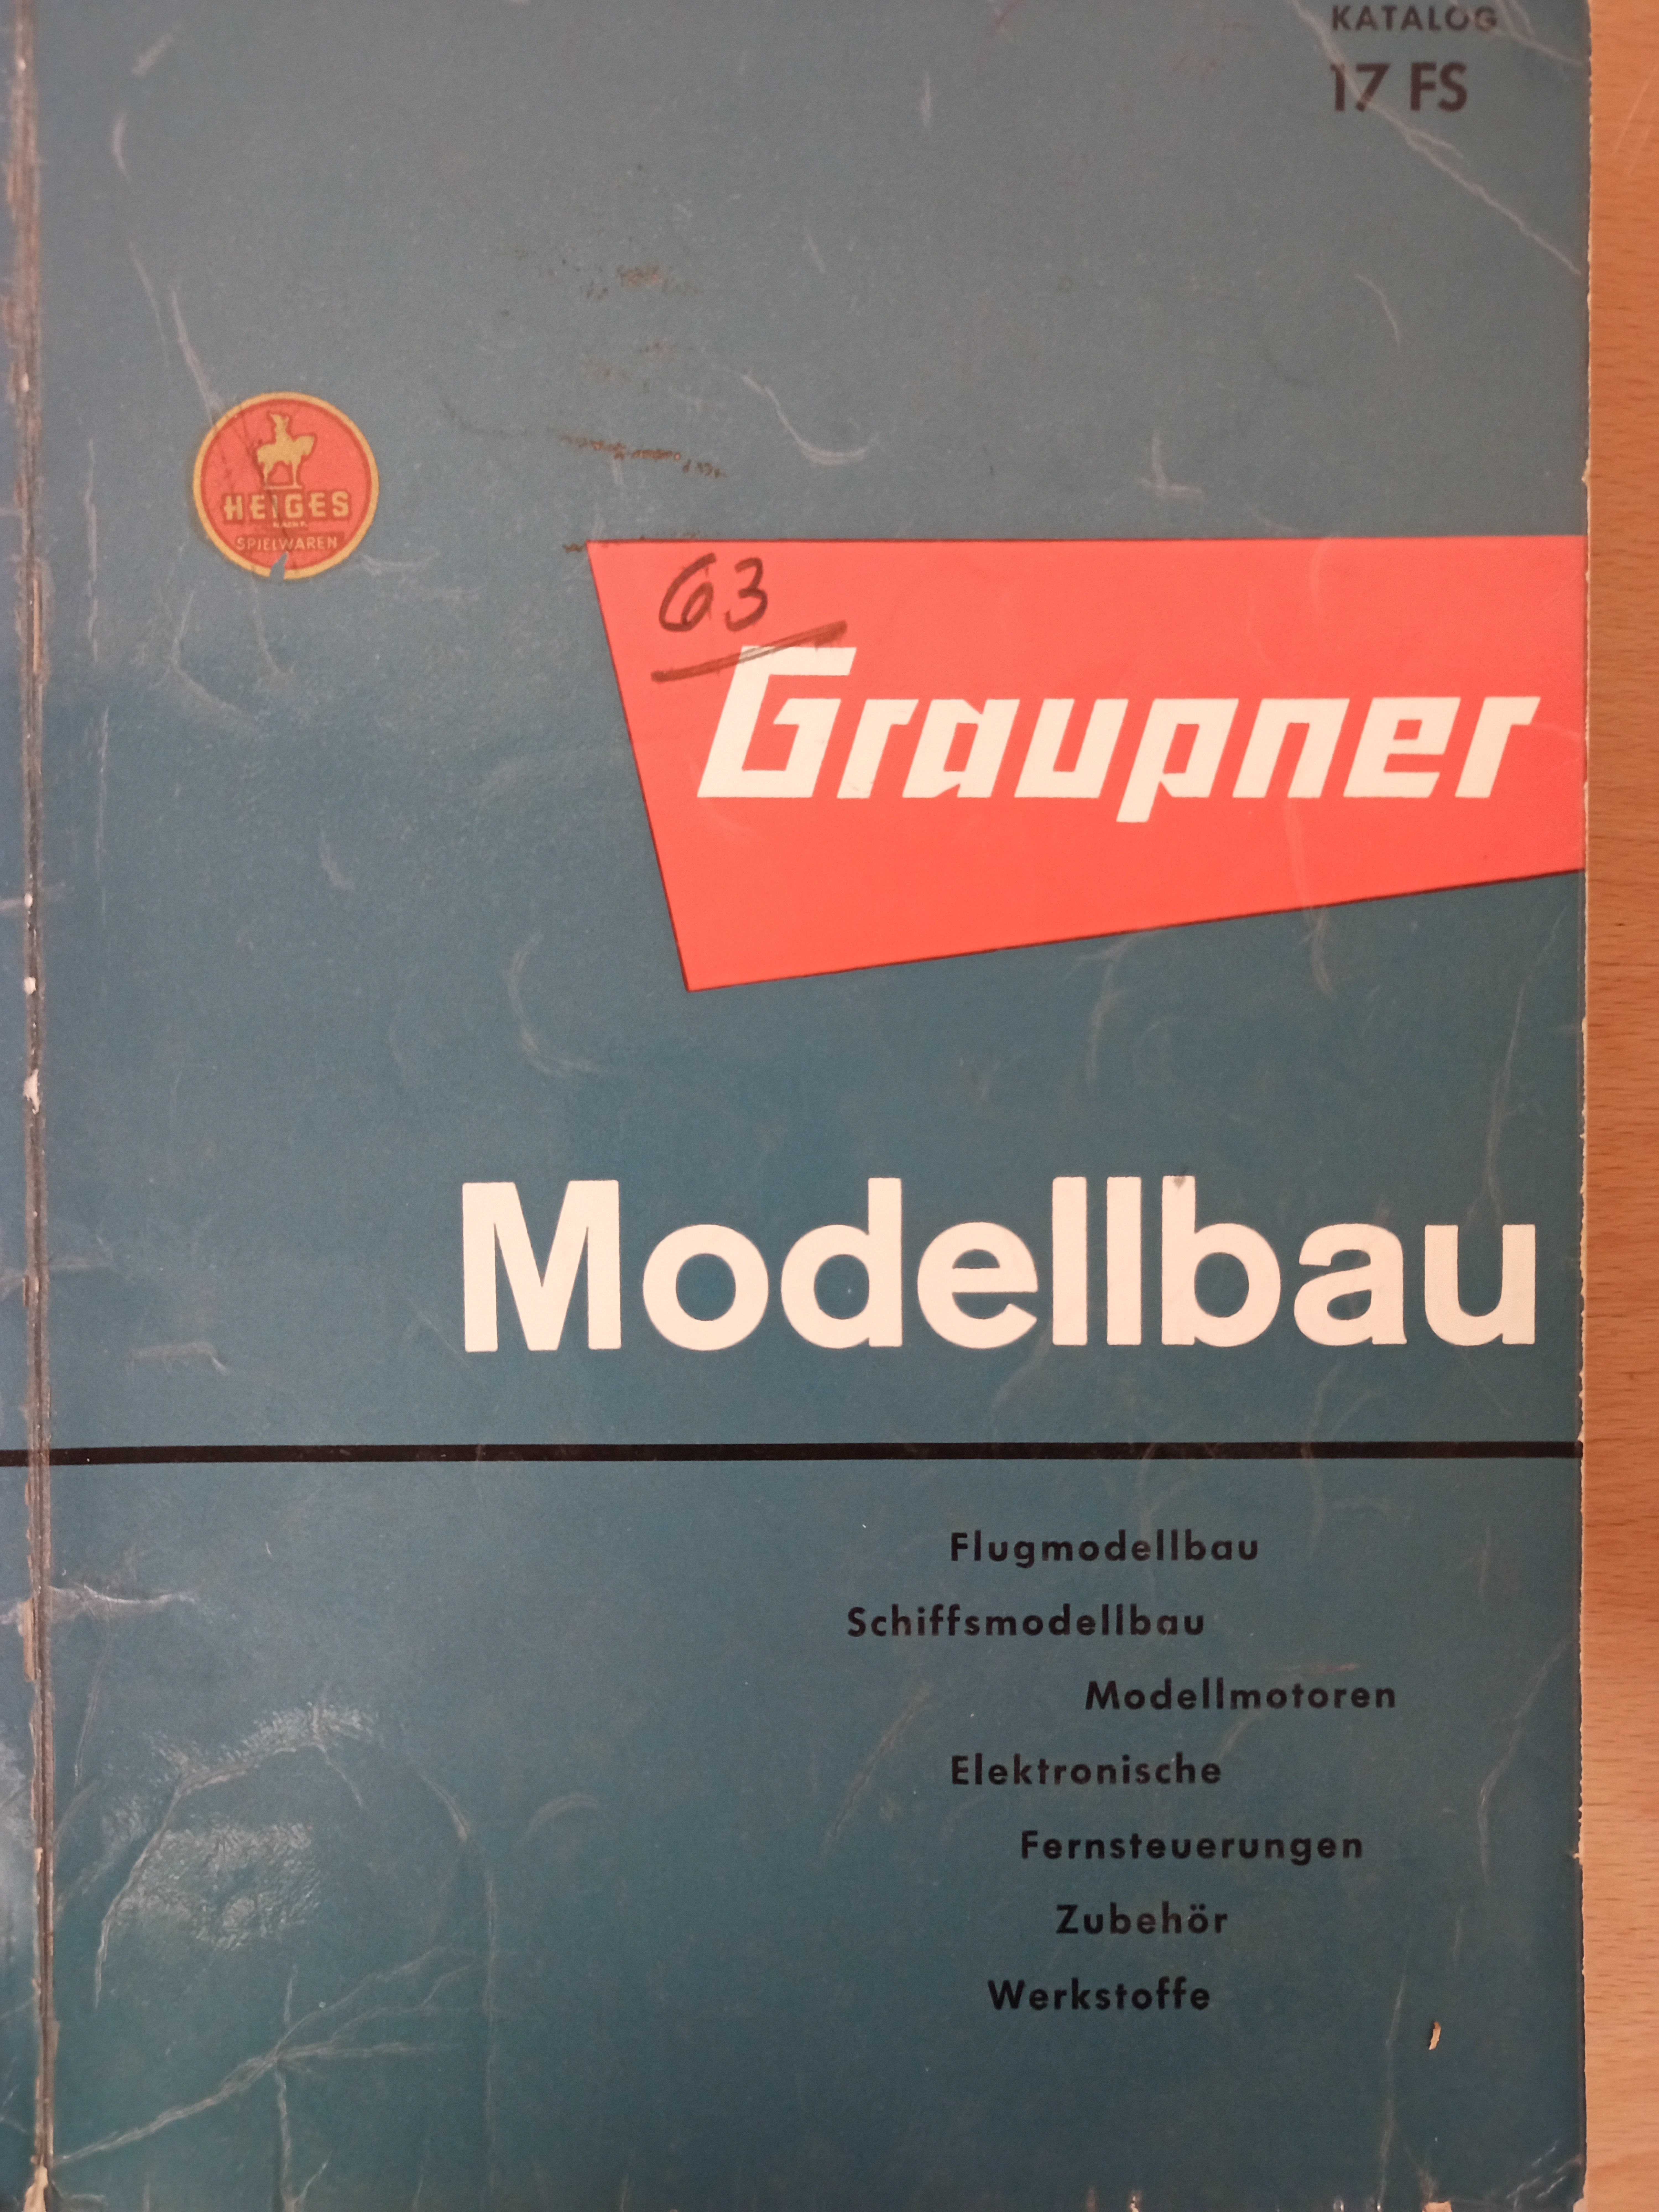 Graupner Katalog 17FS (Deutsches Segelflugmuseum mit Modellflug CC BY-NC-SA)